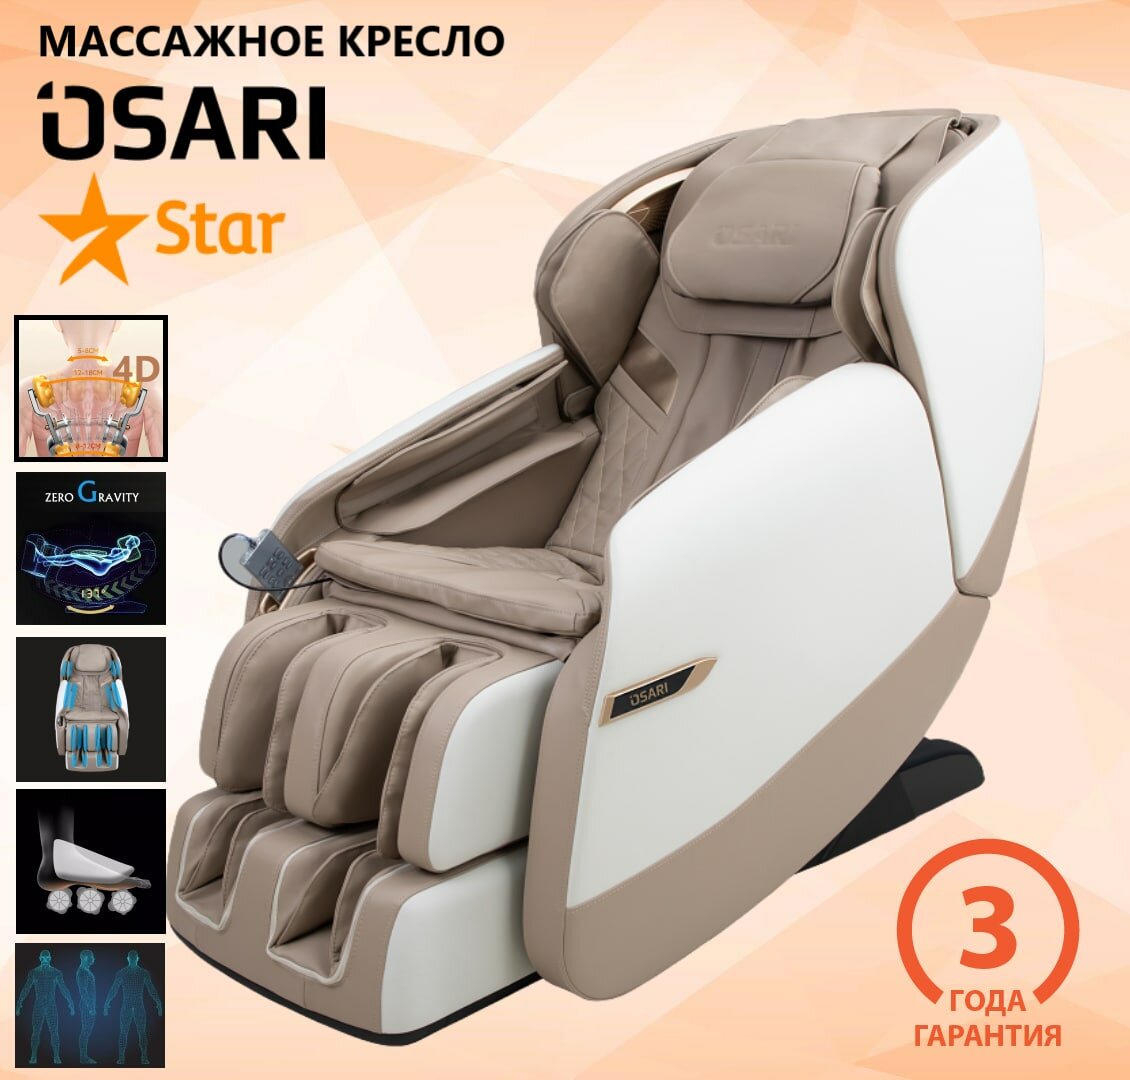   OSARI STAR 4D   